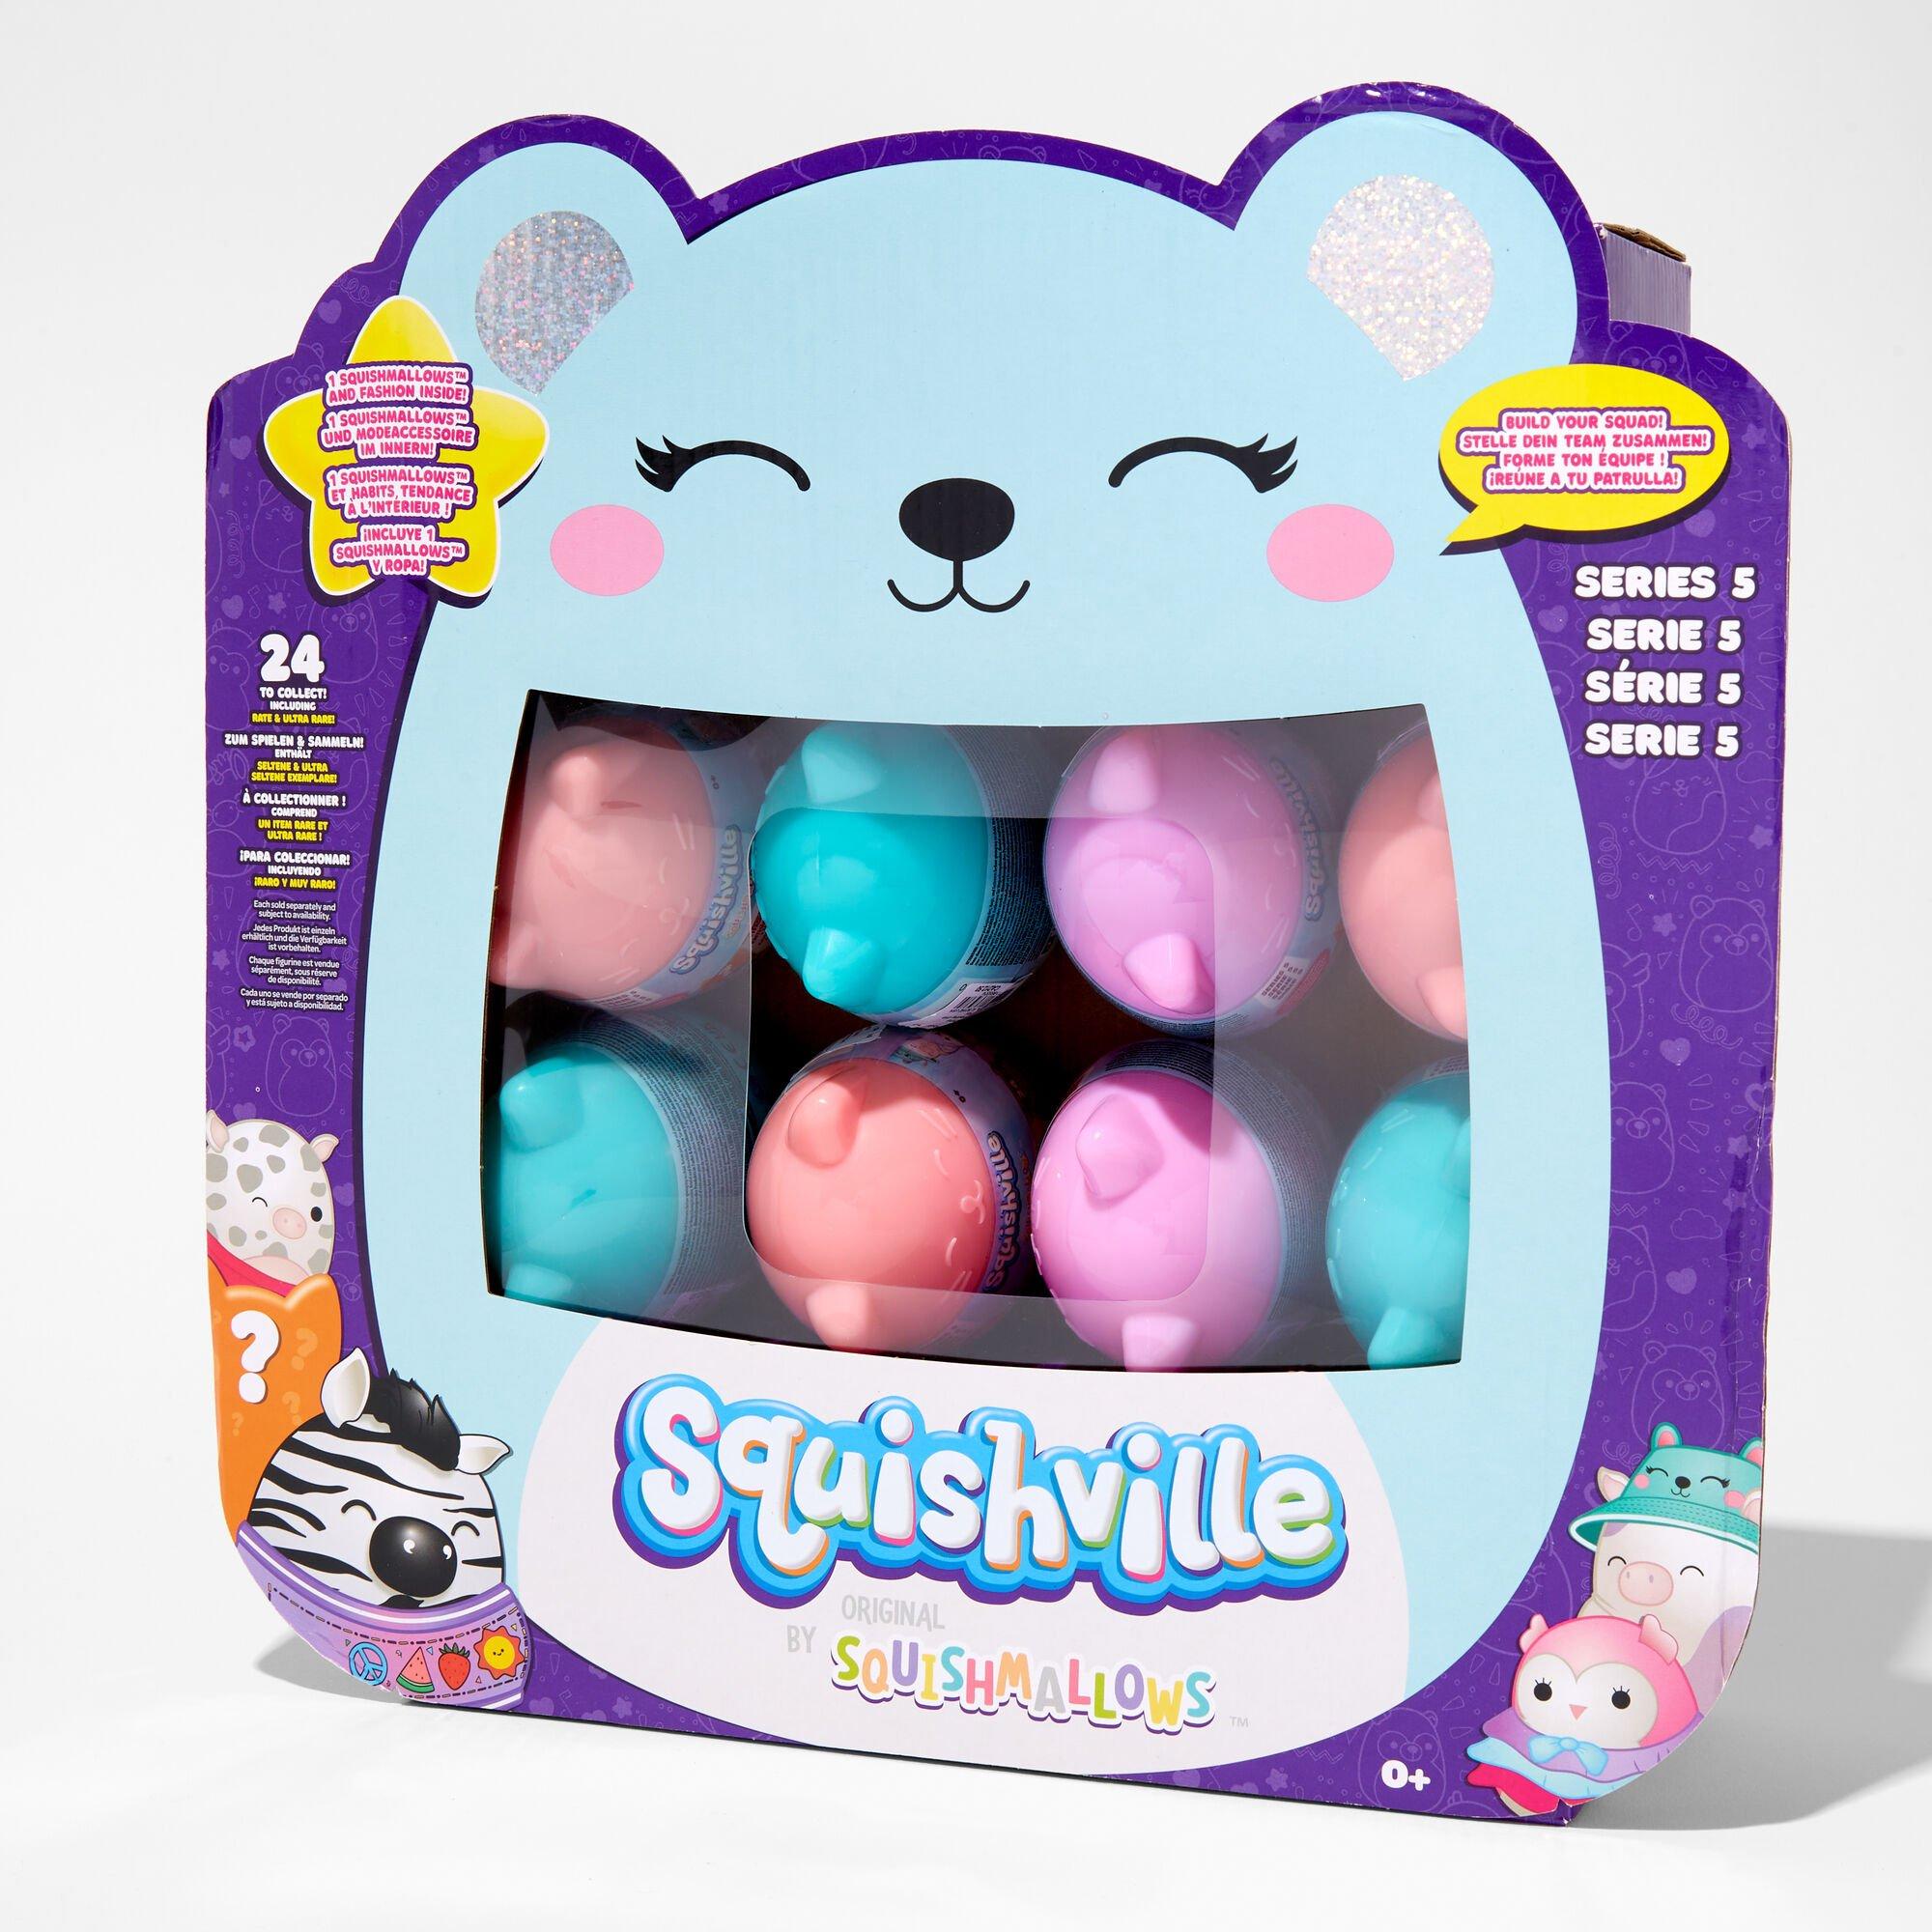 https://media.gamestop.com/i/gamestop/11162389_ALT04/Squishmallows-Squishville-2-in-Mystery-Mini-Plush-Series-3-Blind-Bag